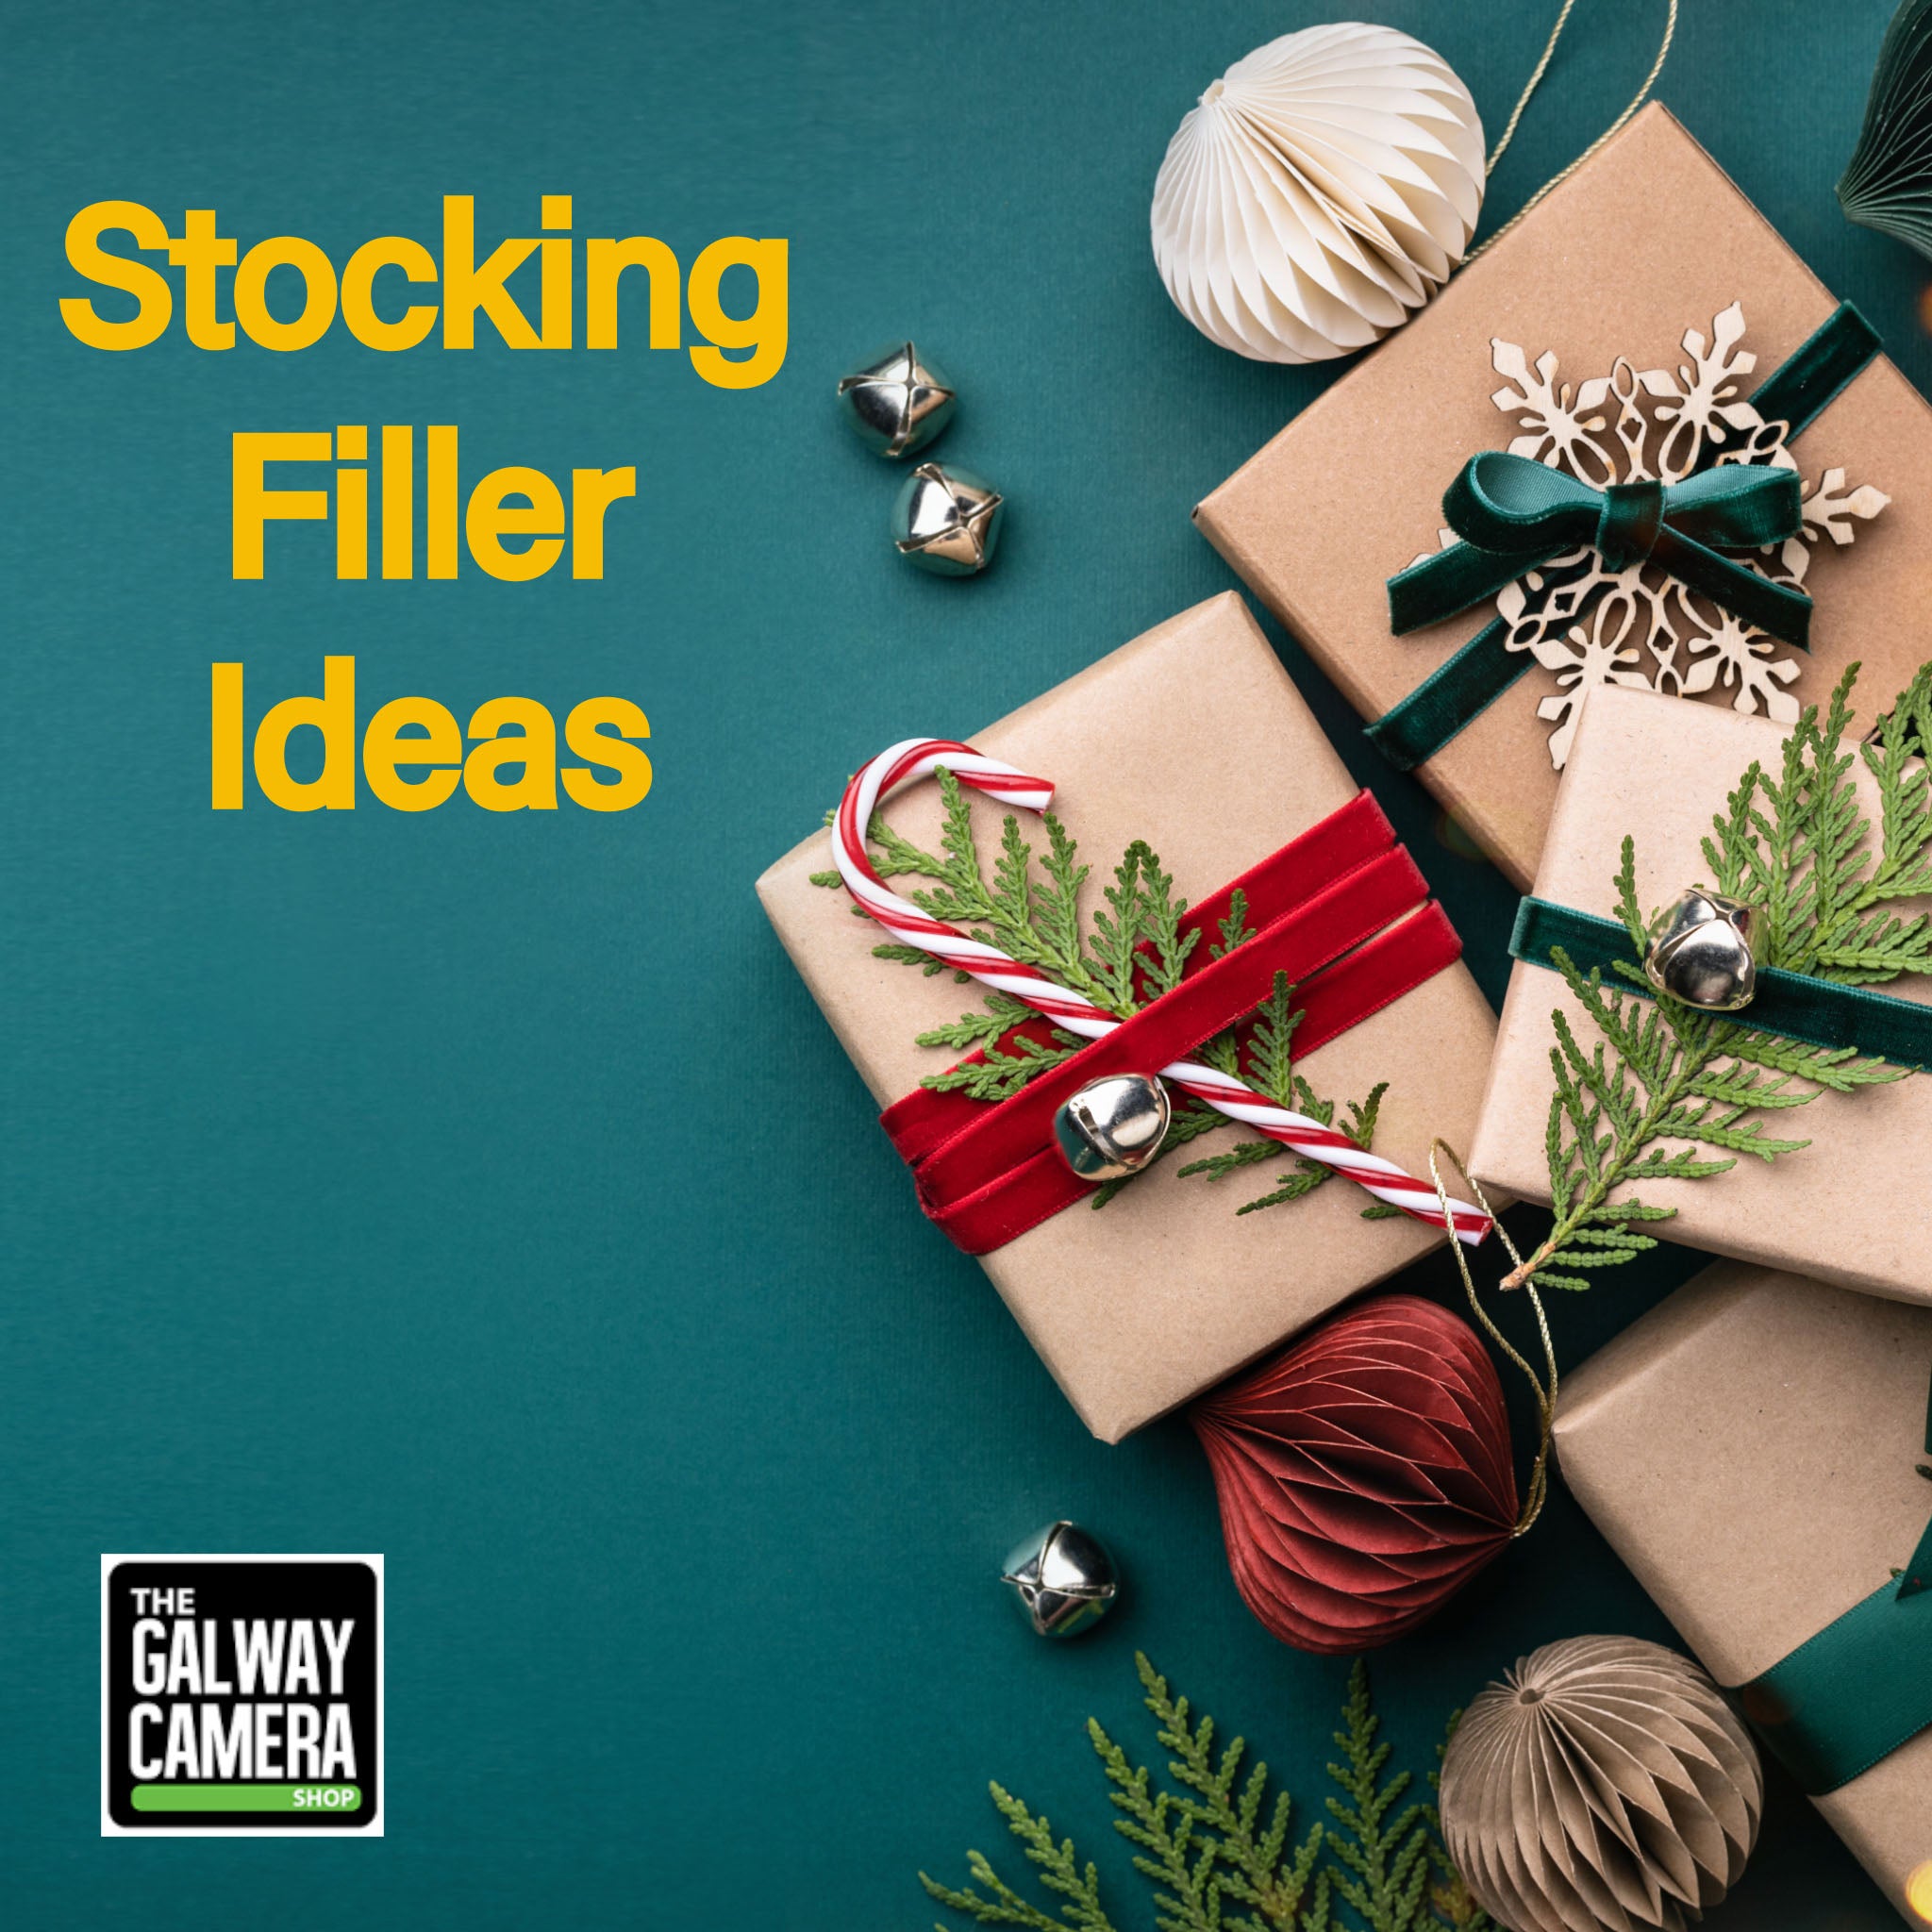 Irish Christmas Gift Ideas: Stocking filler must haves